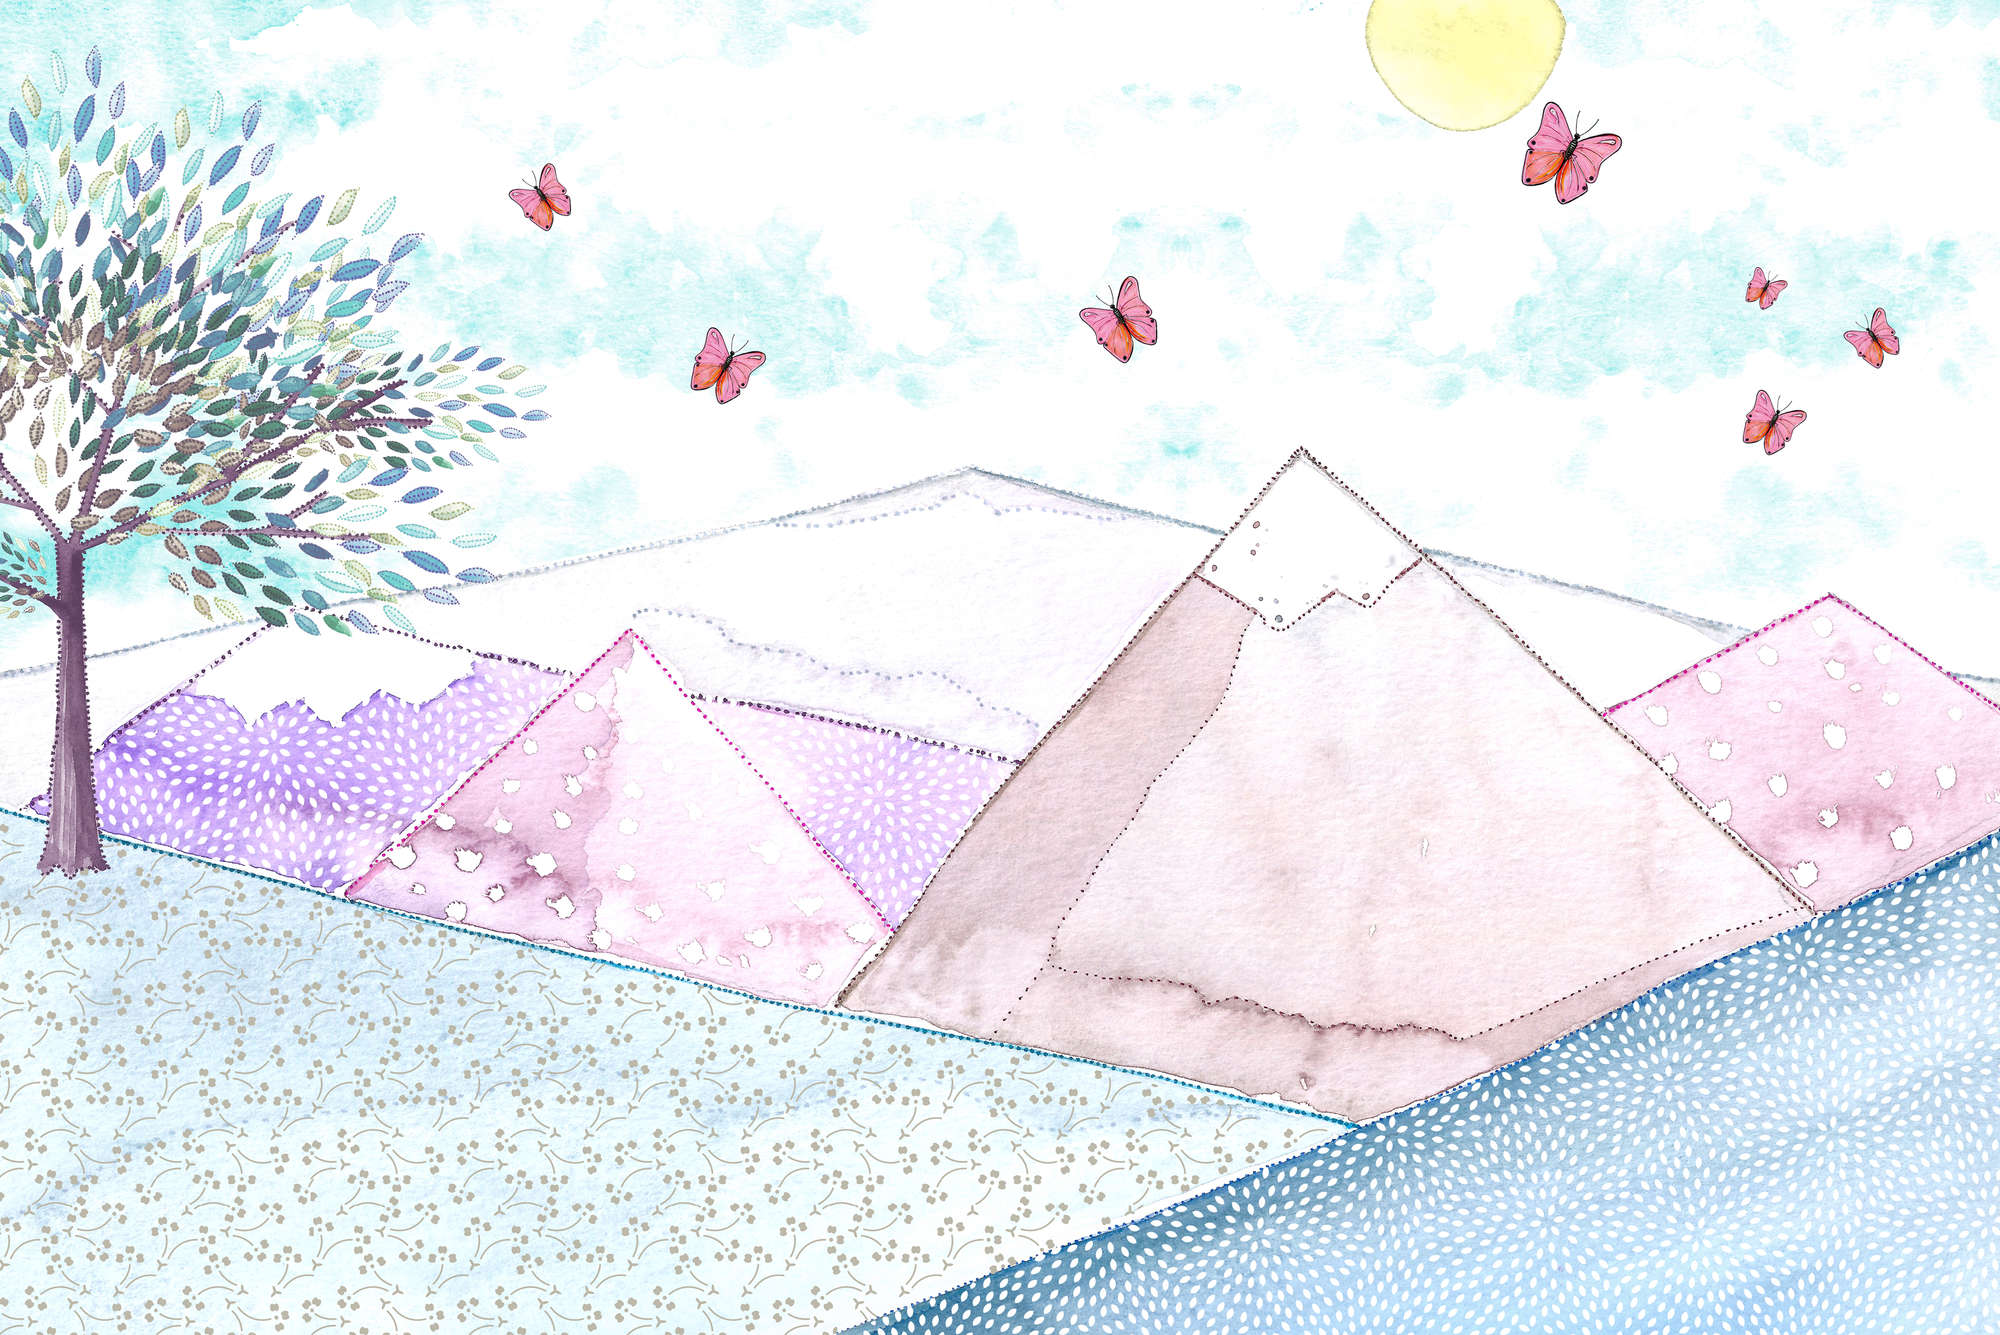             Papel pintado infantil Dibujo de paisaje de montaña en nácar liso
        